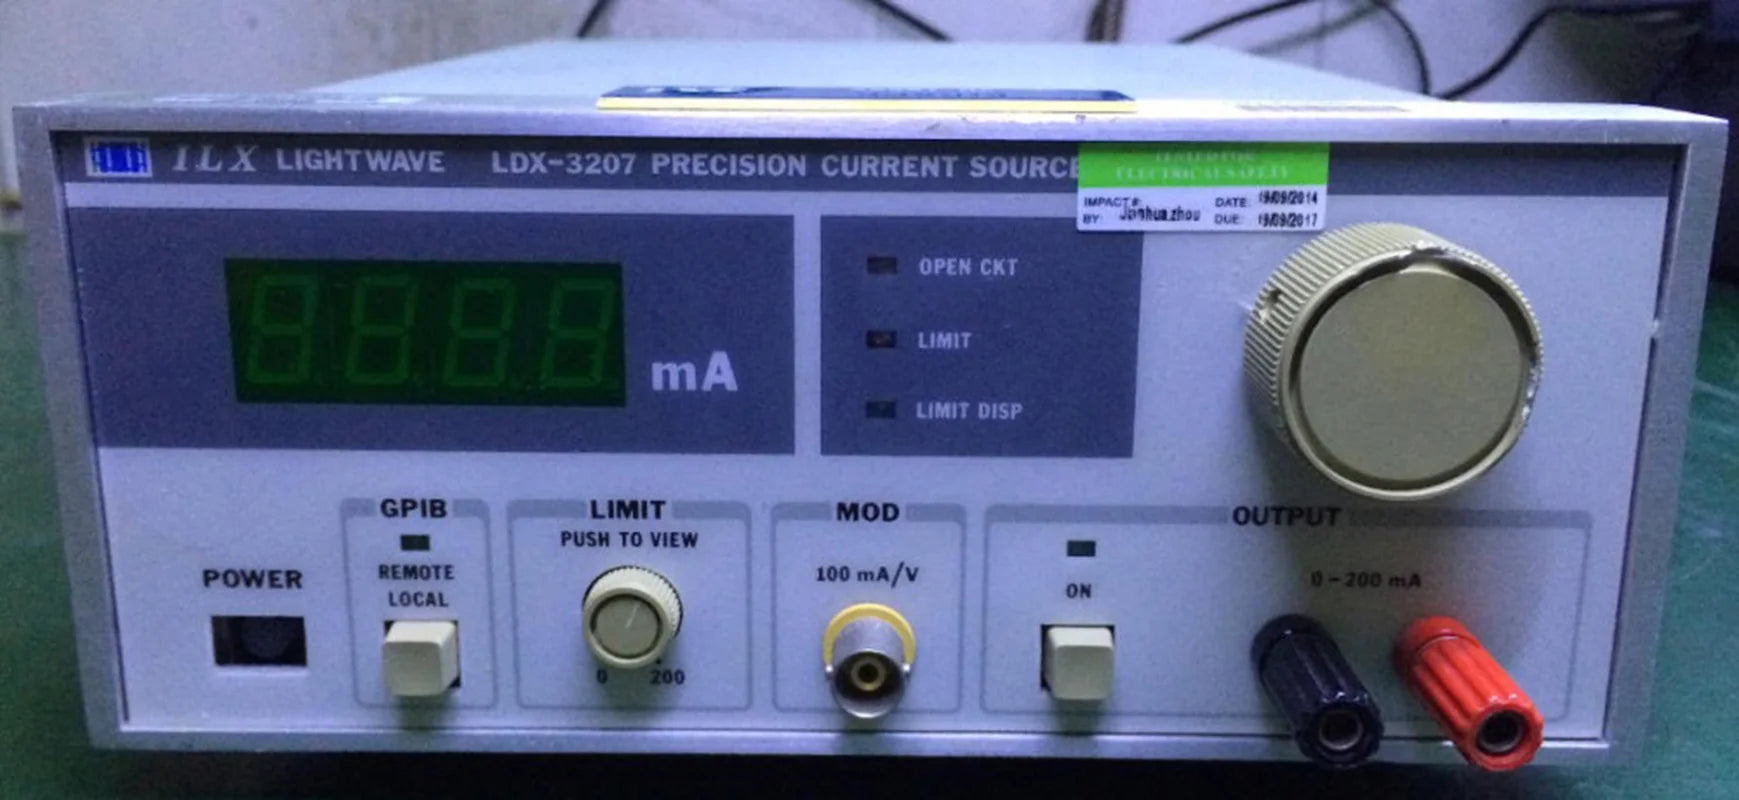 ILX LIGHTWAVE LDX-3207 Precision Current Source Used